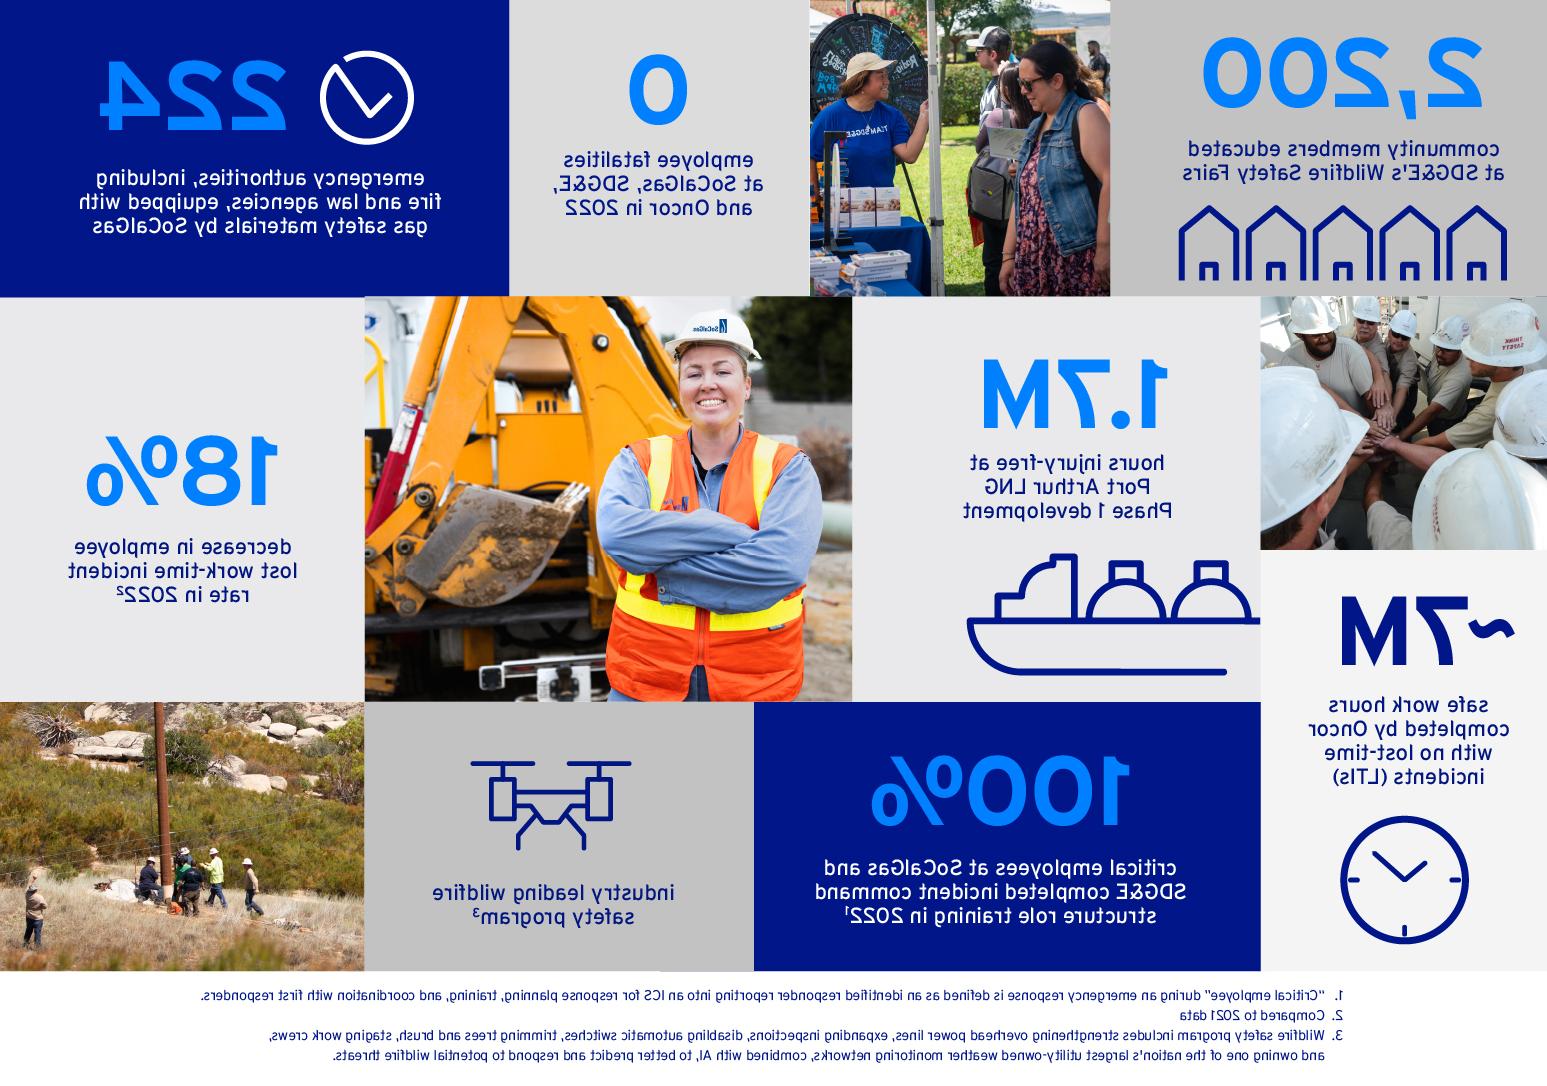 Infographic illustrating Sempra's commitment to safety via key statistics